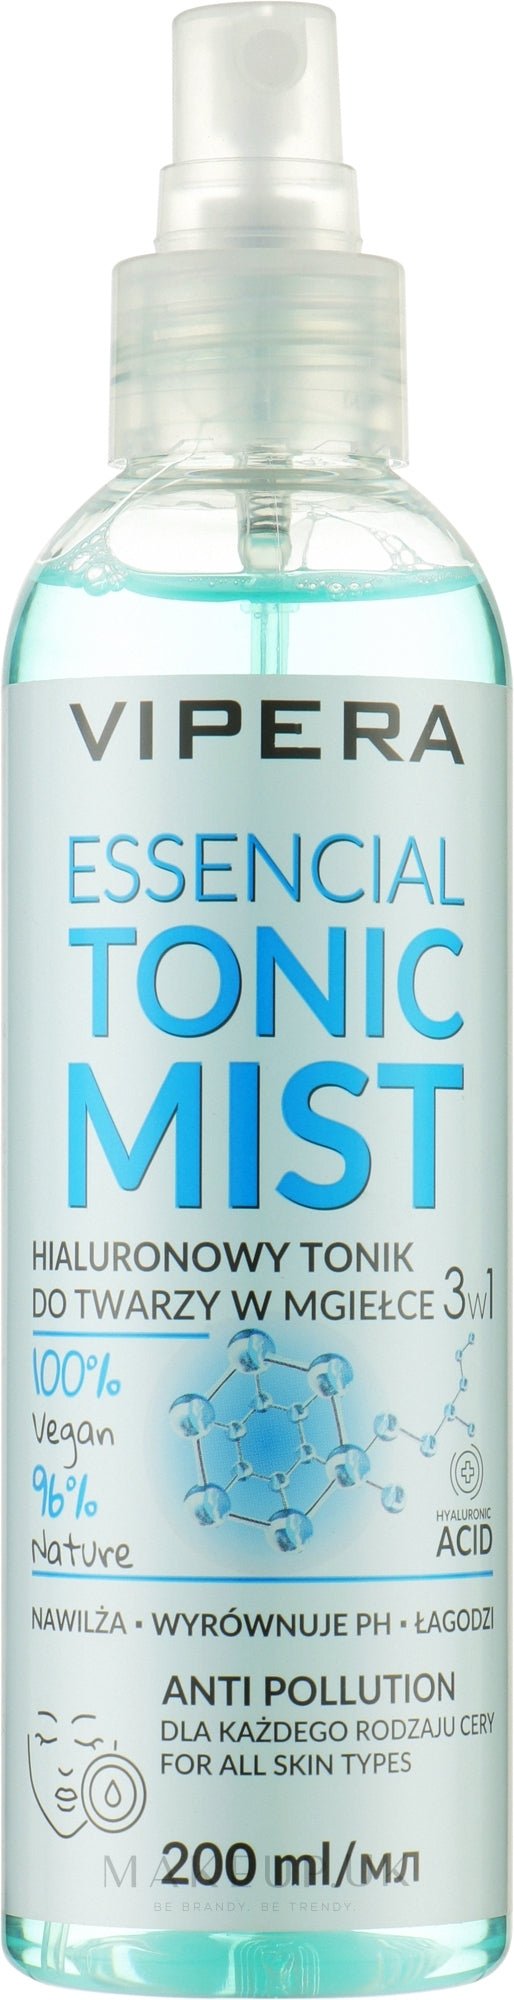 Vipera Essencial Tonic Mist Hyalluronic Acid - AllurebeautypkVipera Essencial Tonic Mist Hyalluronic Acid